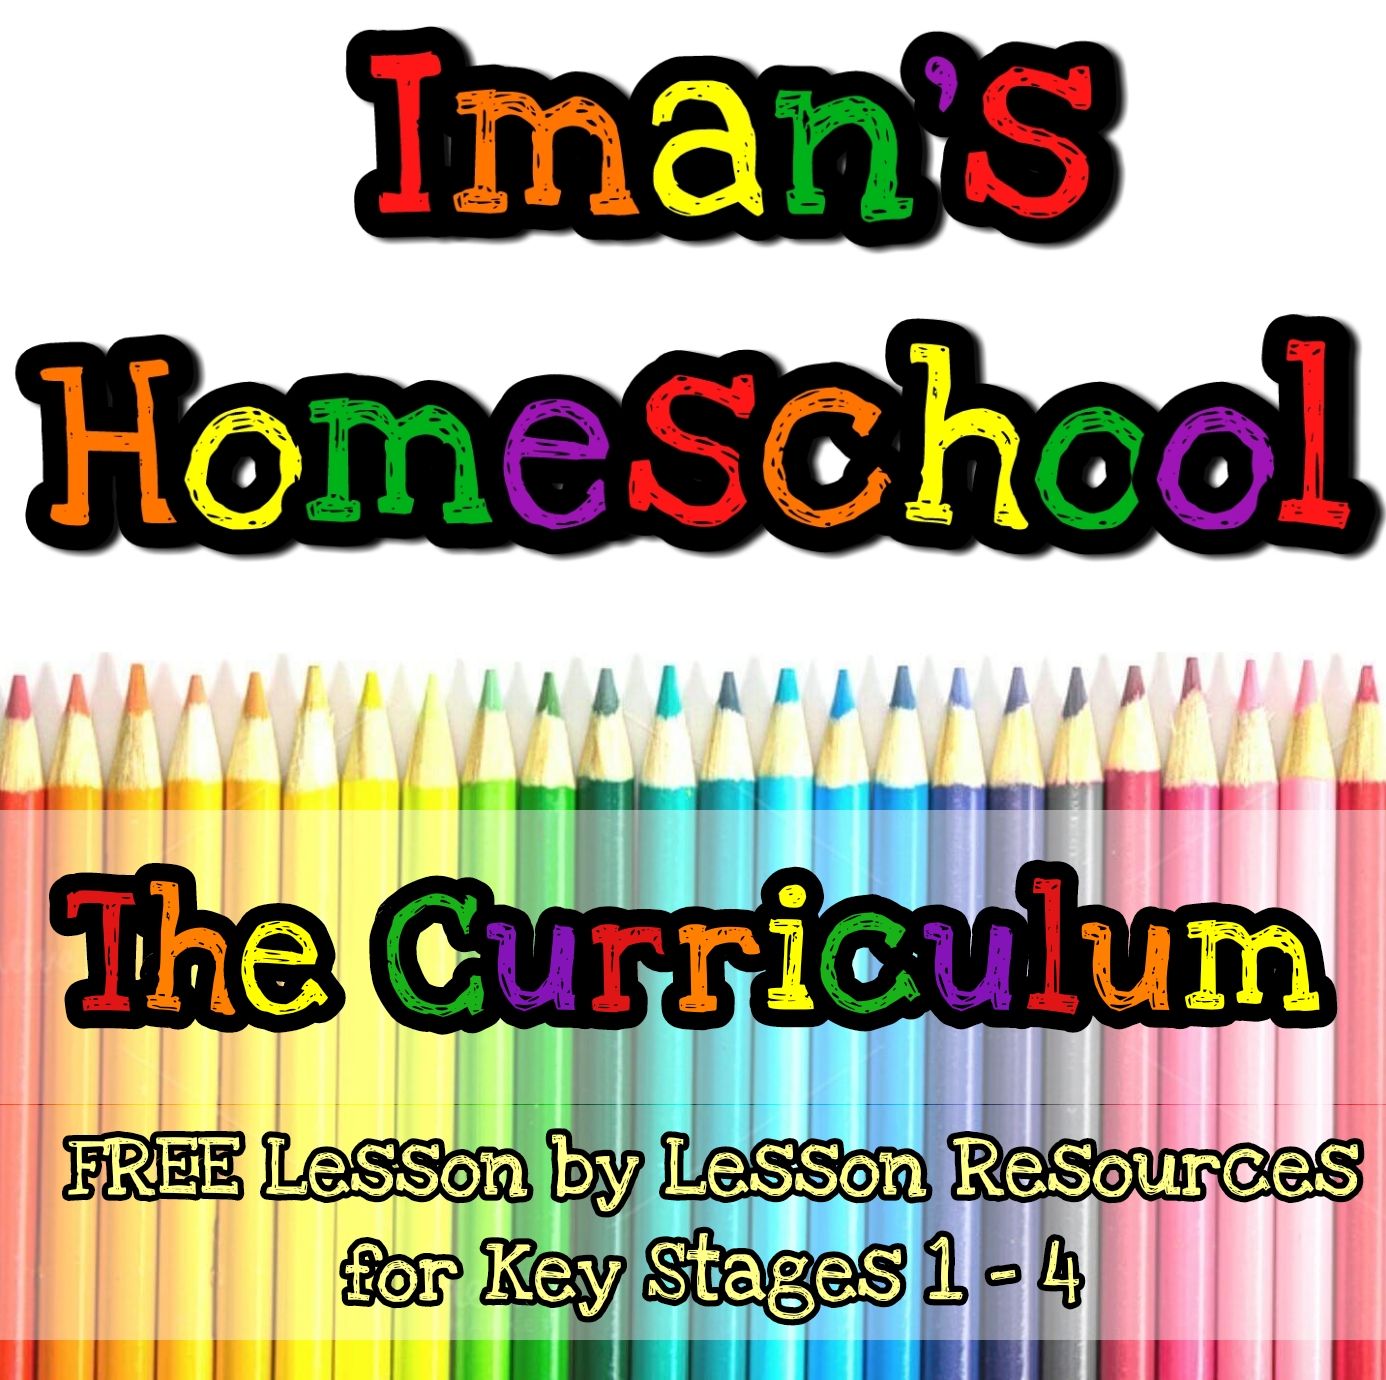 Visit Iman's Homeschool - The Curriculum